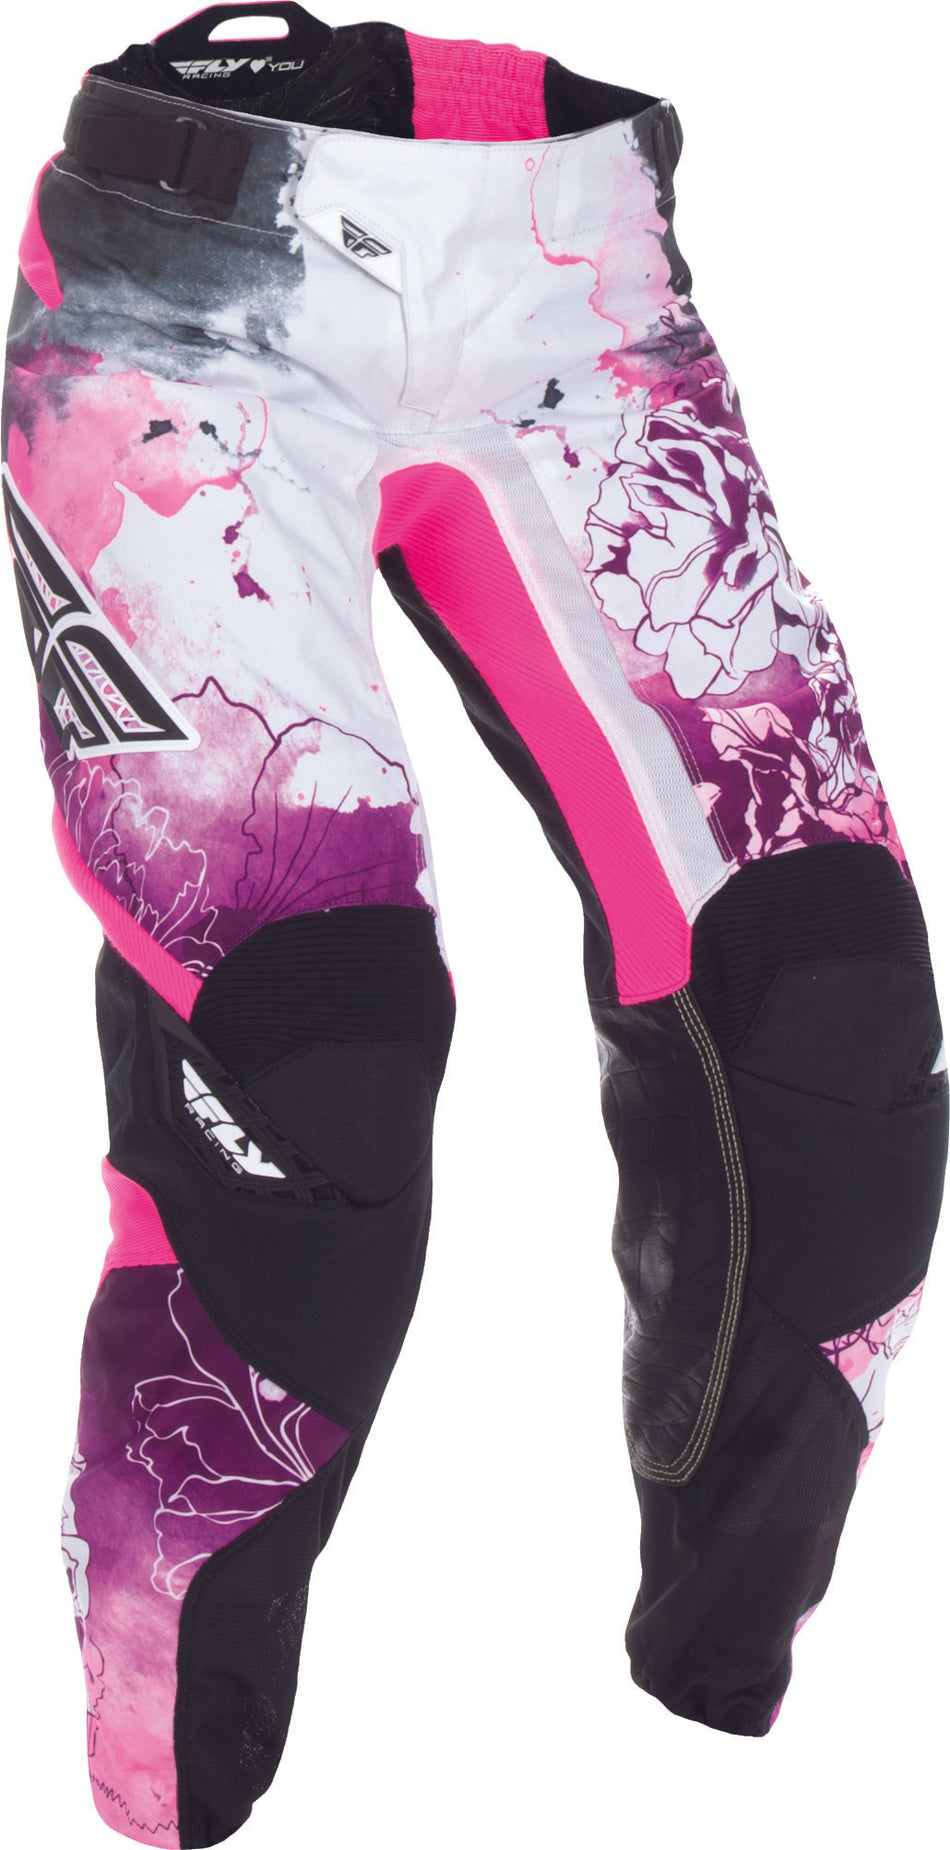 FLY RACING Kinetic Women's Race Pant Pink/Purple Sz 13/14 370-63210